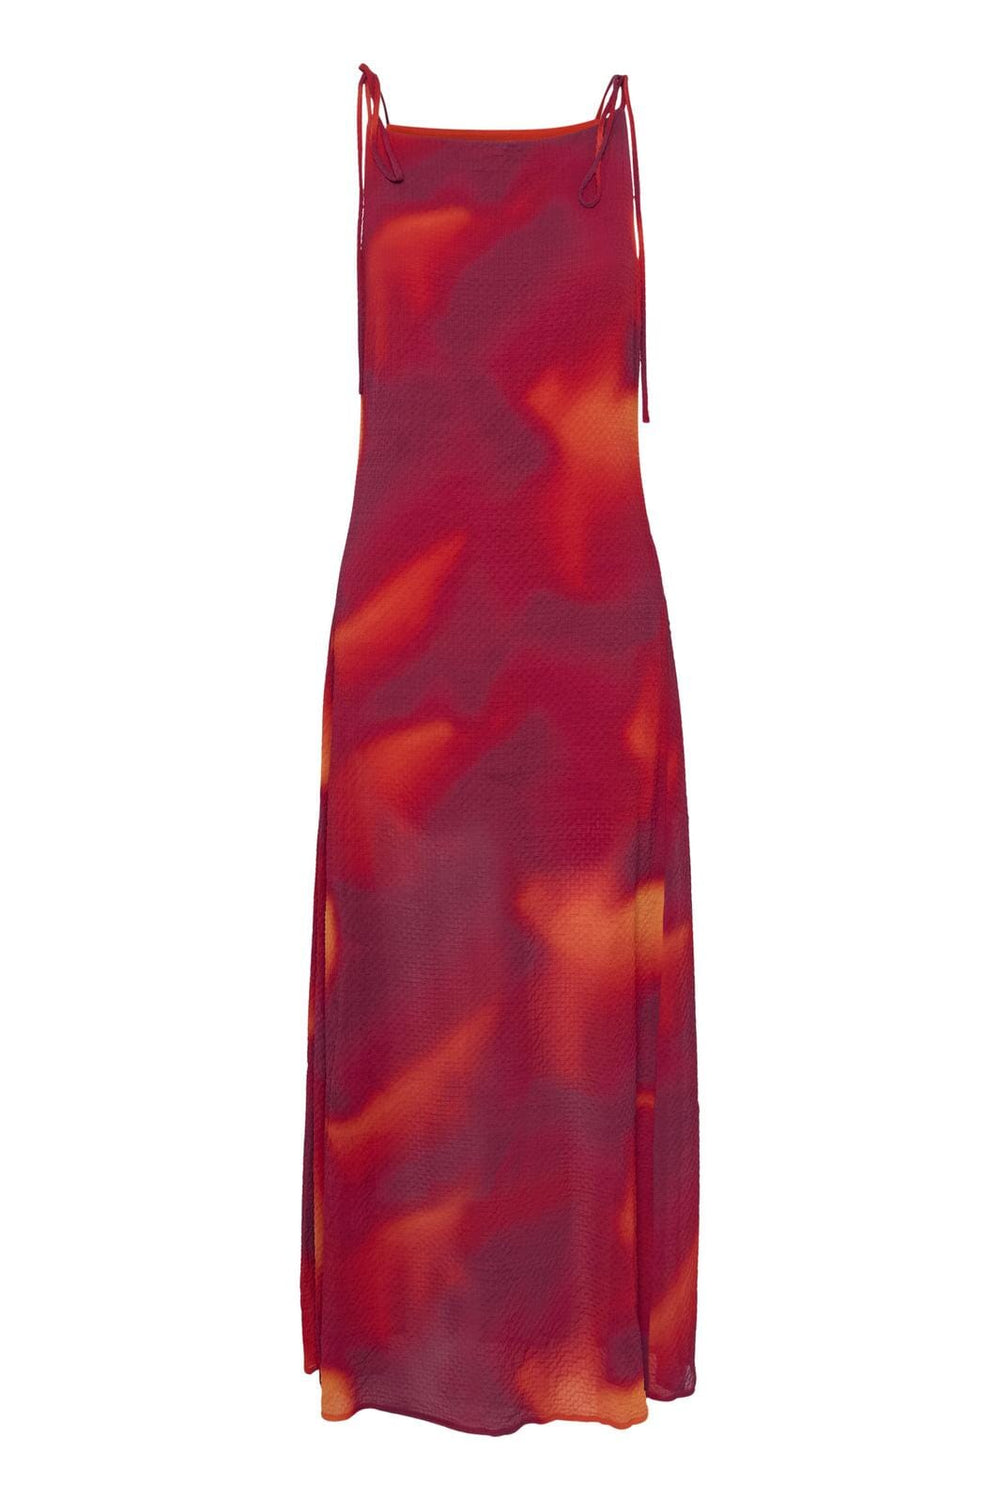 Gestuz - FlamiaGZ P singlet dress - Red fire